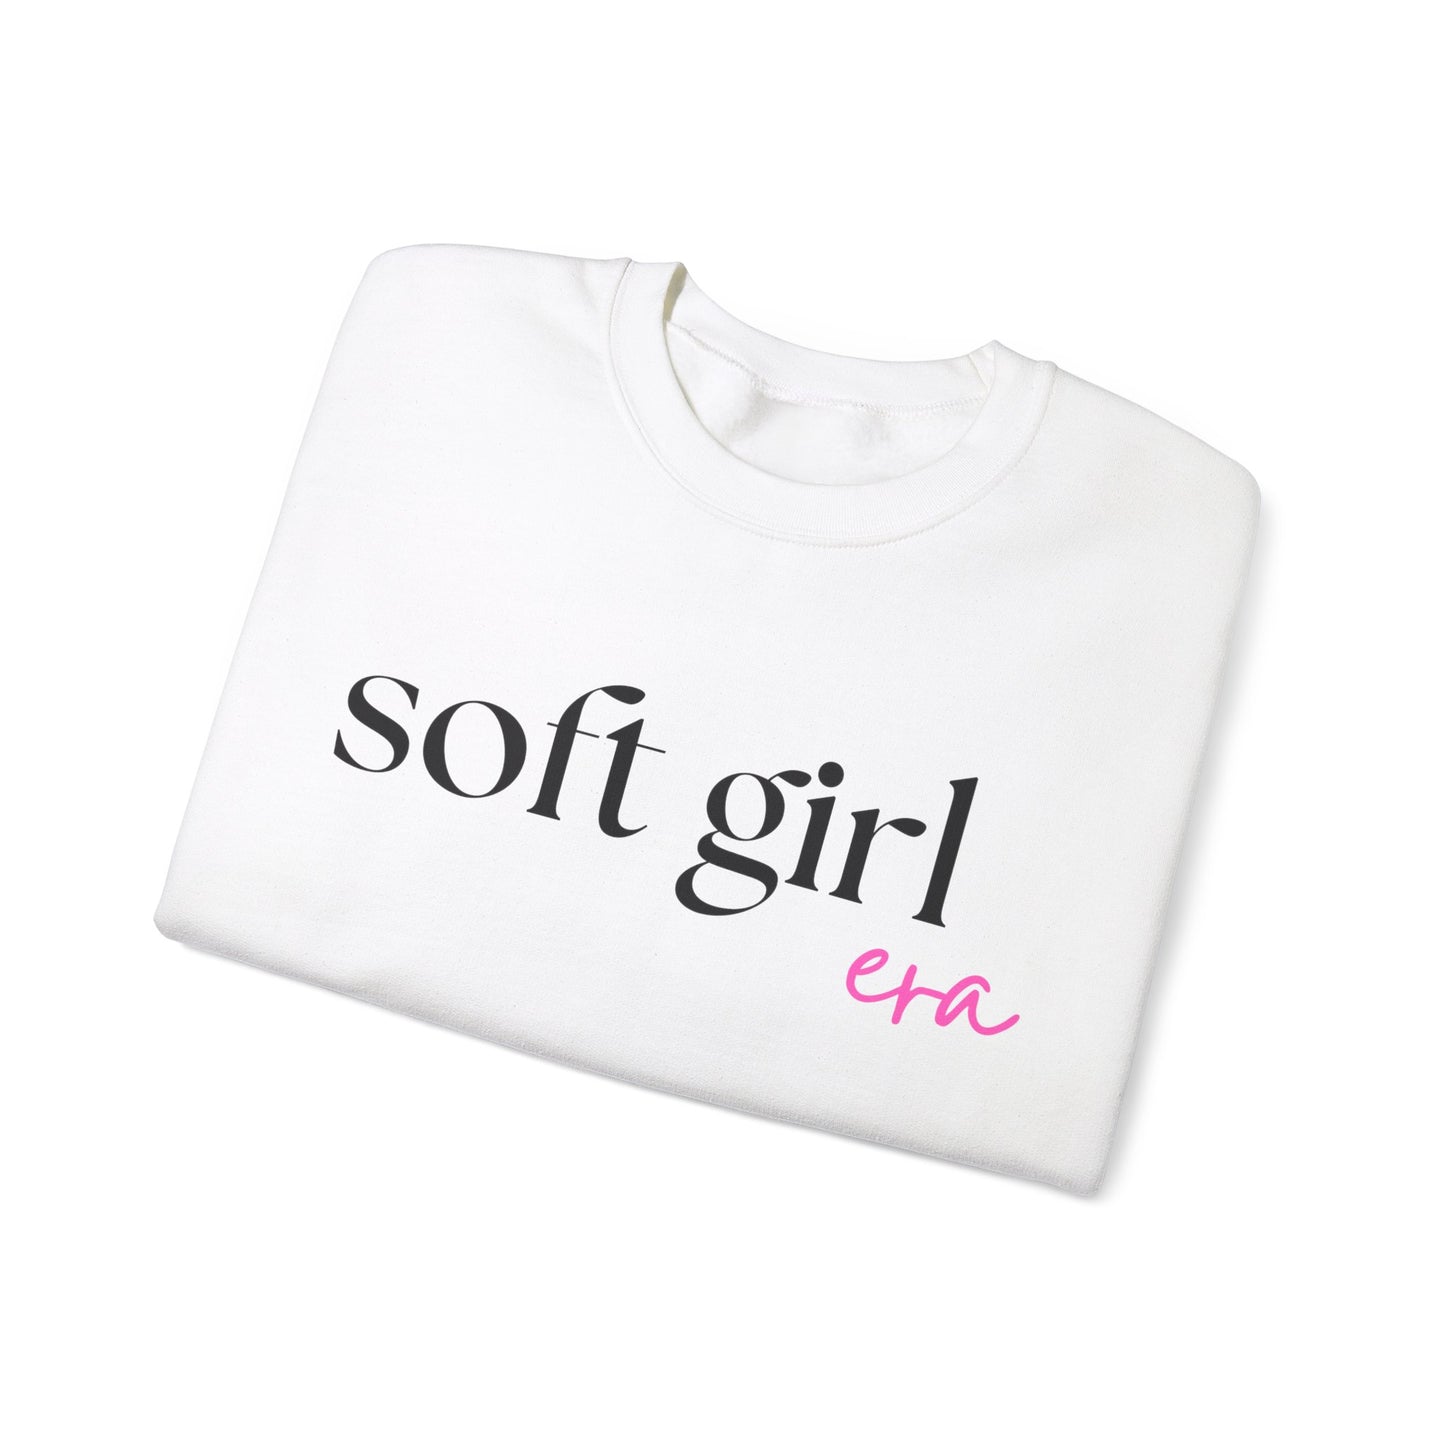 "It Girl Collection" Soft Girl Era - White